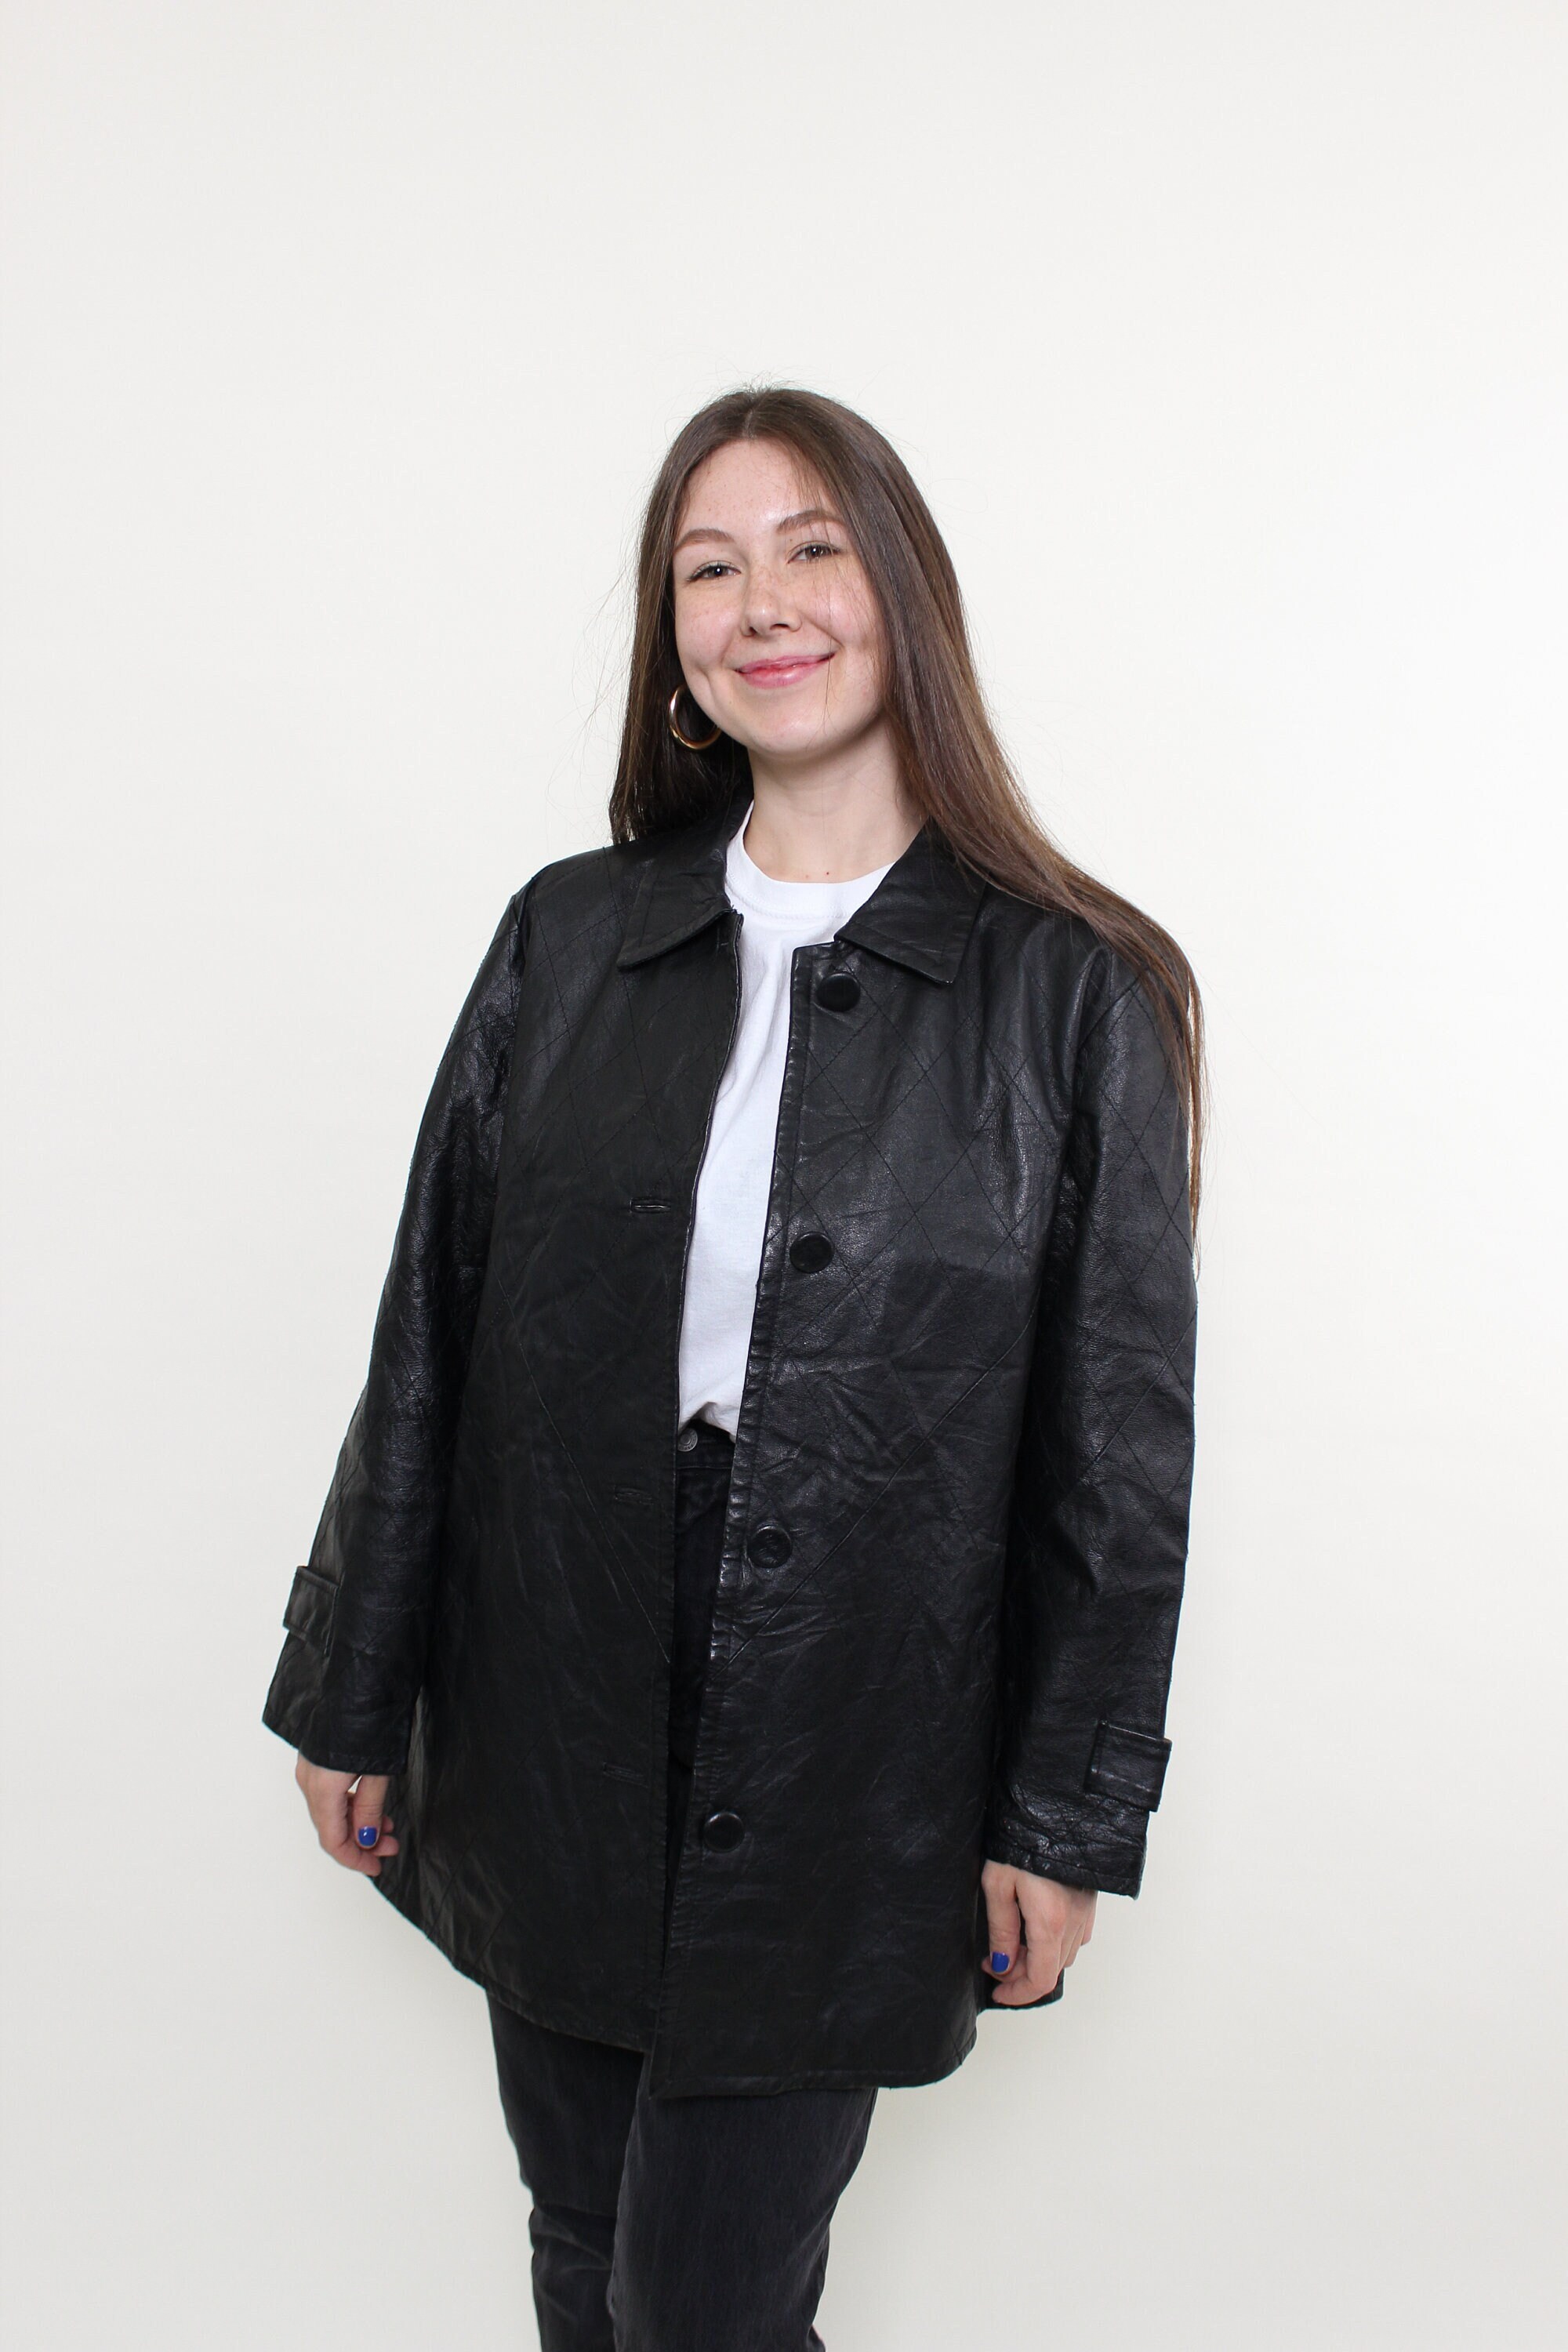 Women Baseball Leather Jacket Studded Rivets Nightclub Bomber Punk Coats  Outwear